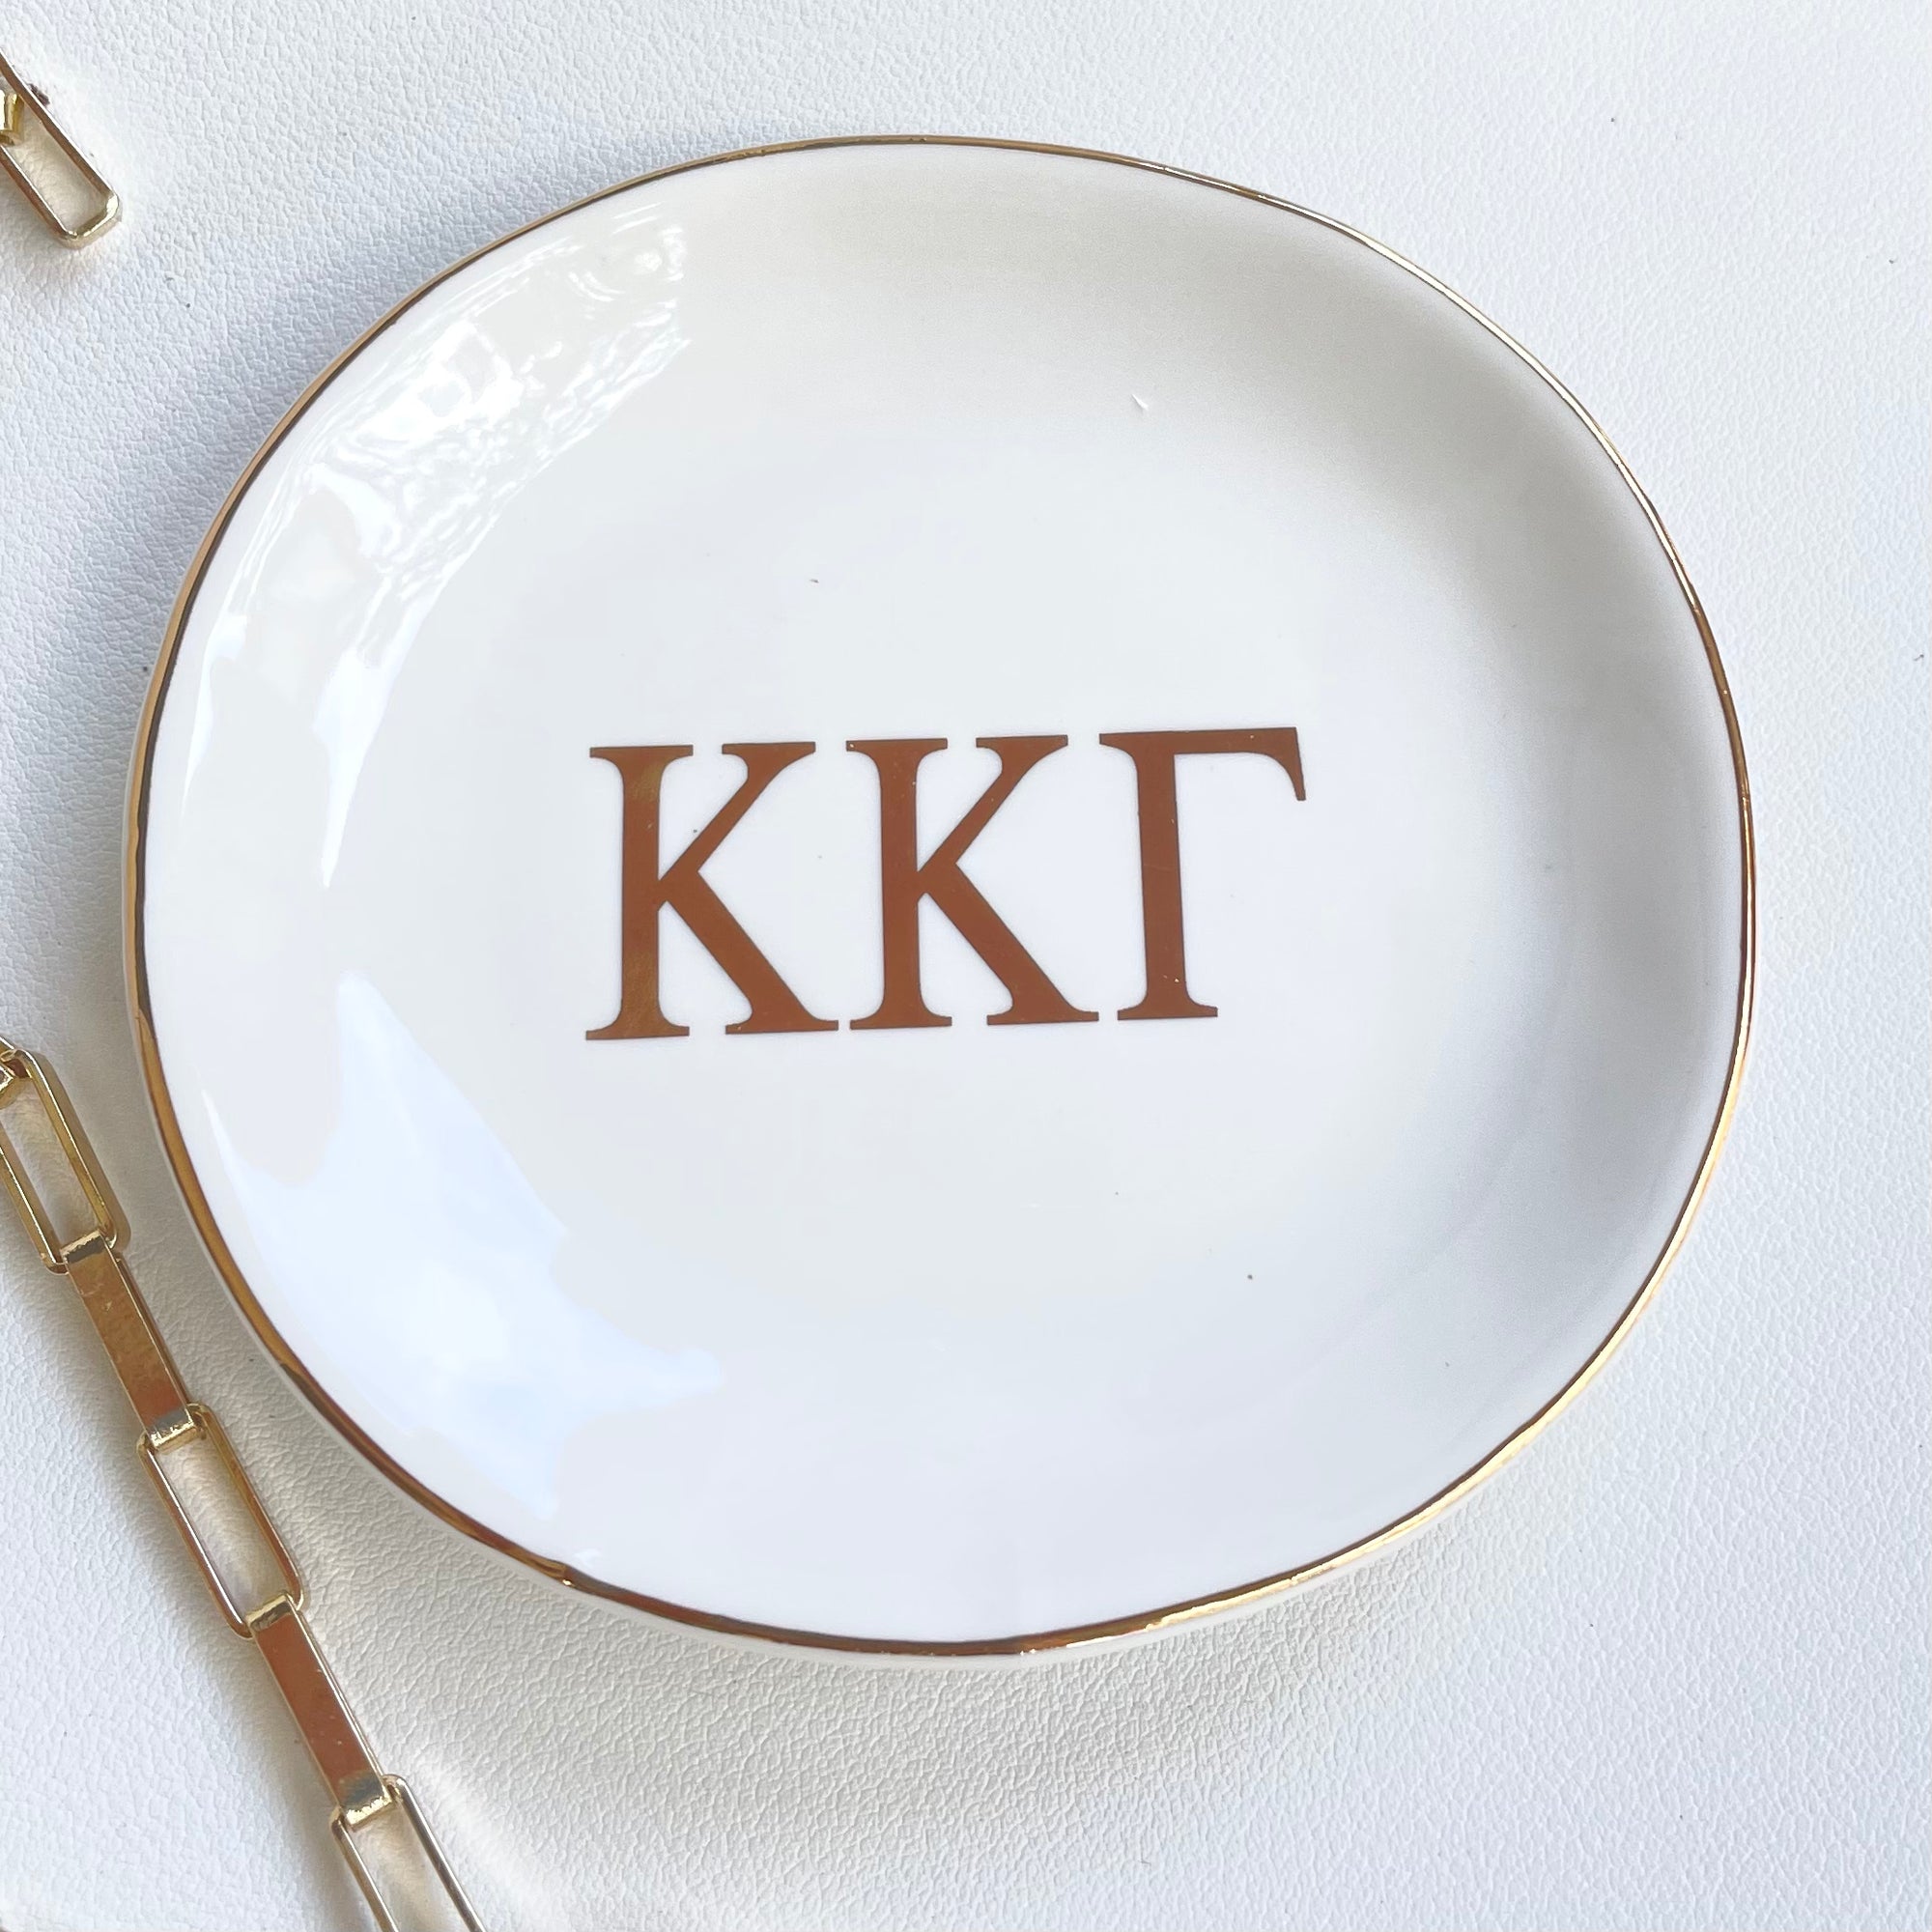 Kappa Kappa Gamma Sorority Ring Dish with gold trim